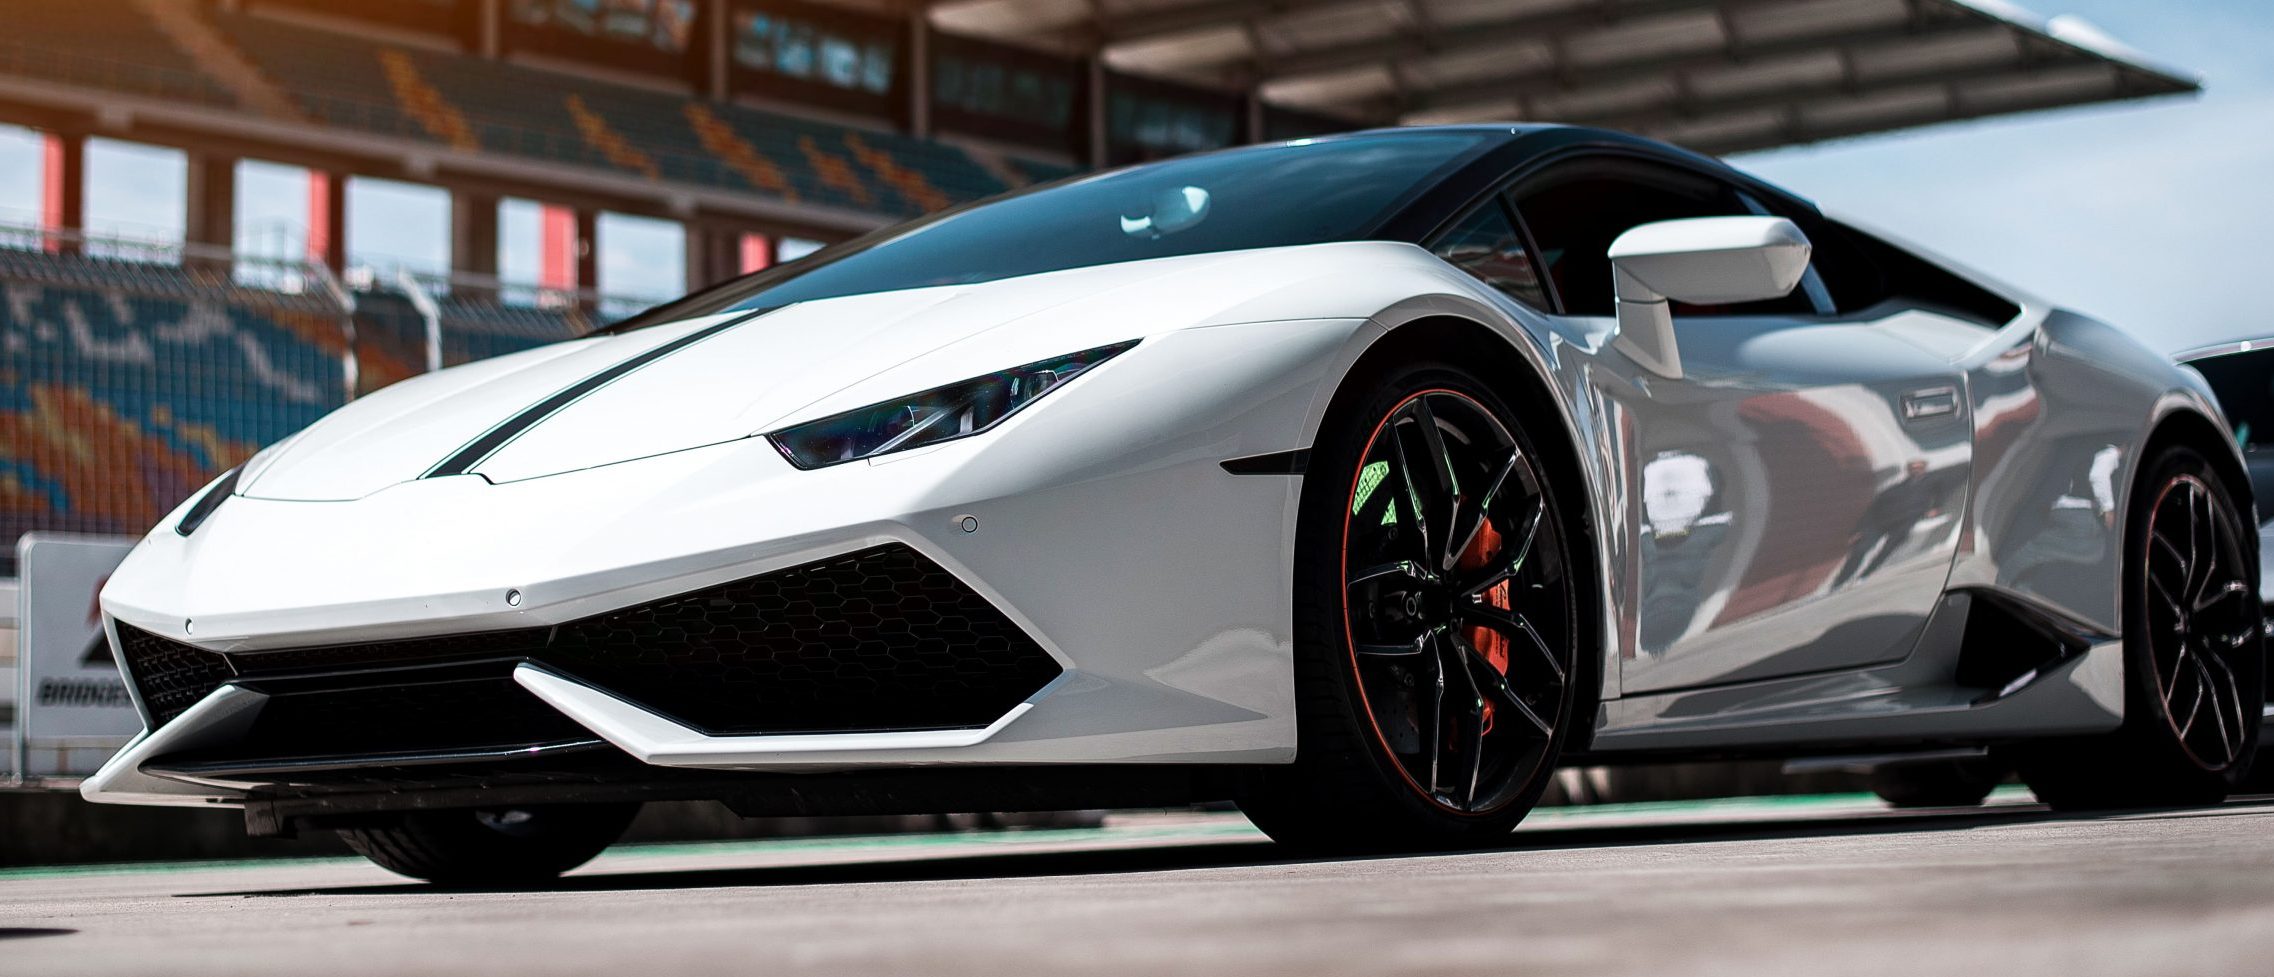 Lamborghini supercars